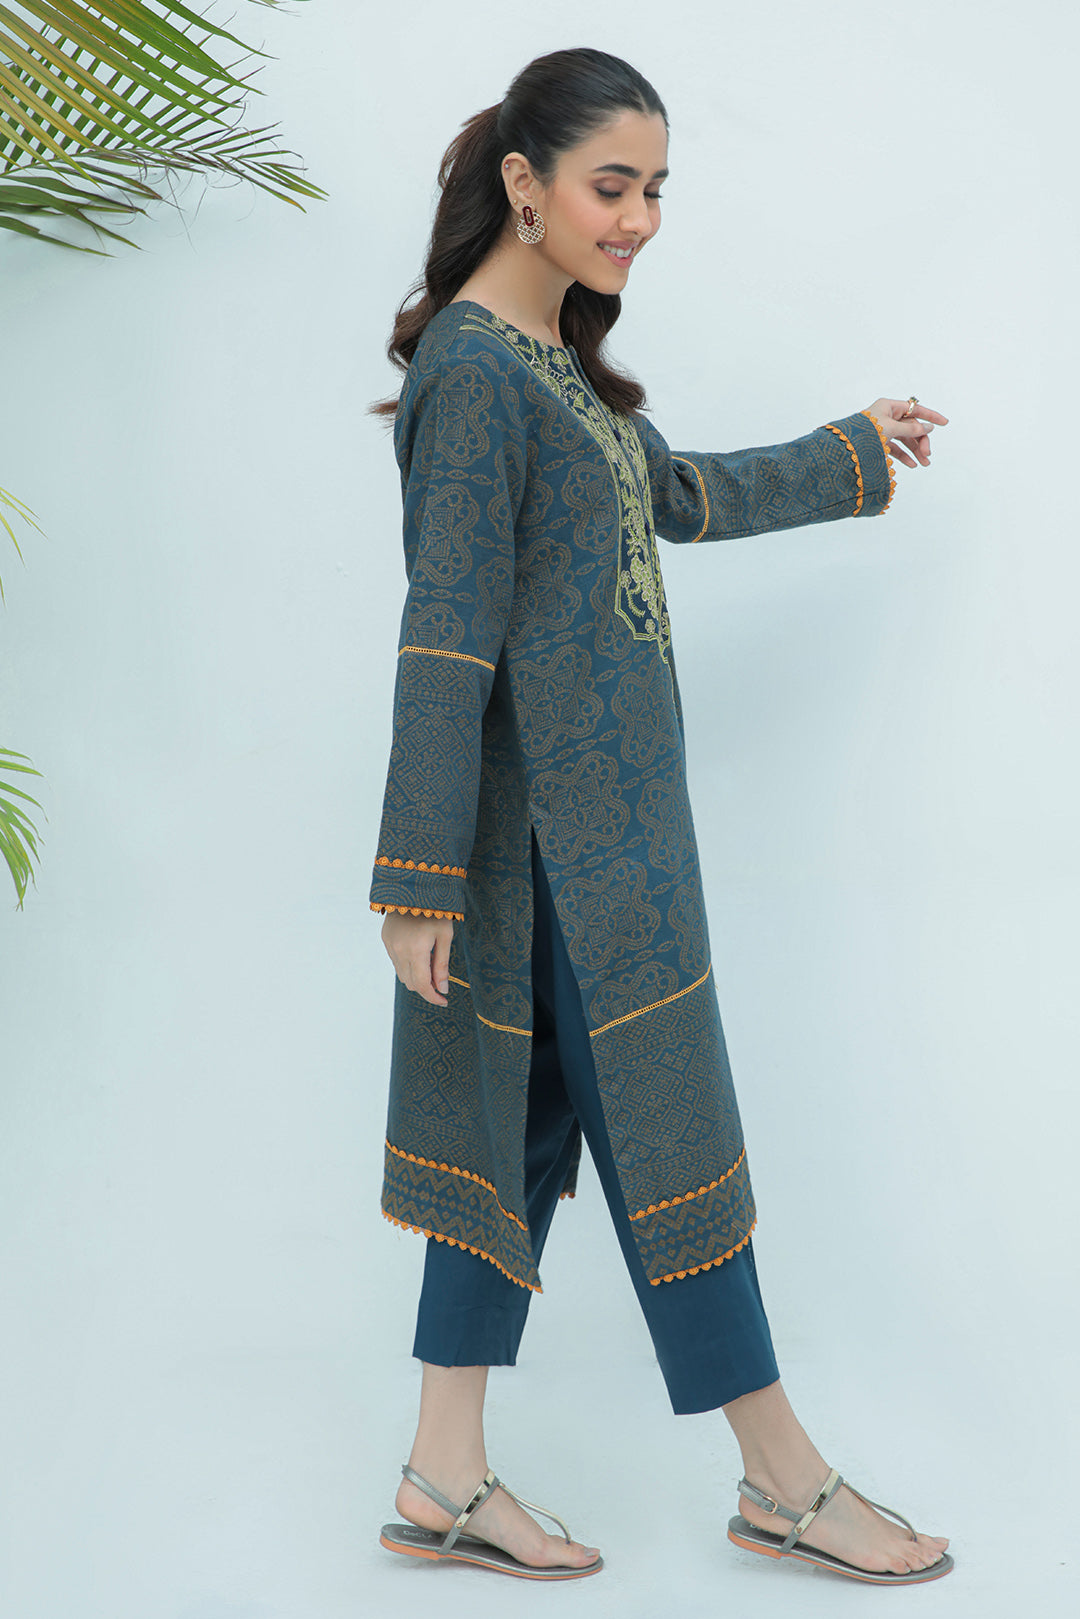 1 Piece - Dyed Embroidered Slub khaddar Jacquard Shirt P0254